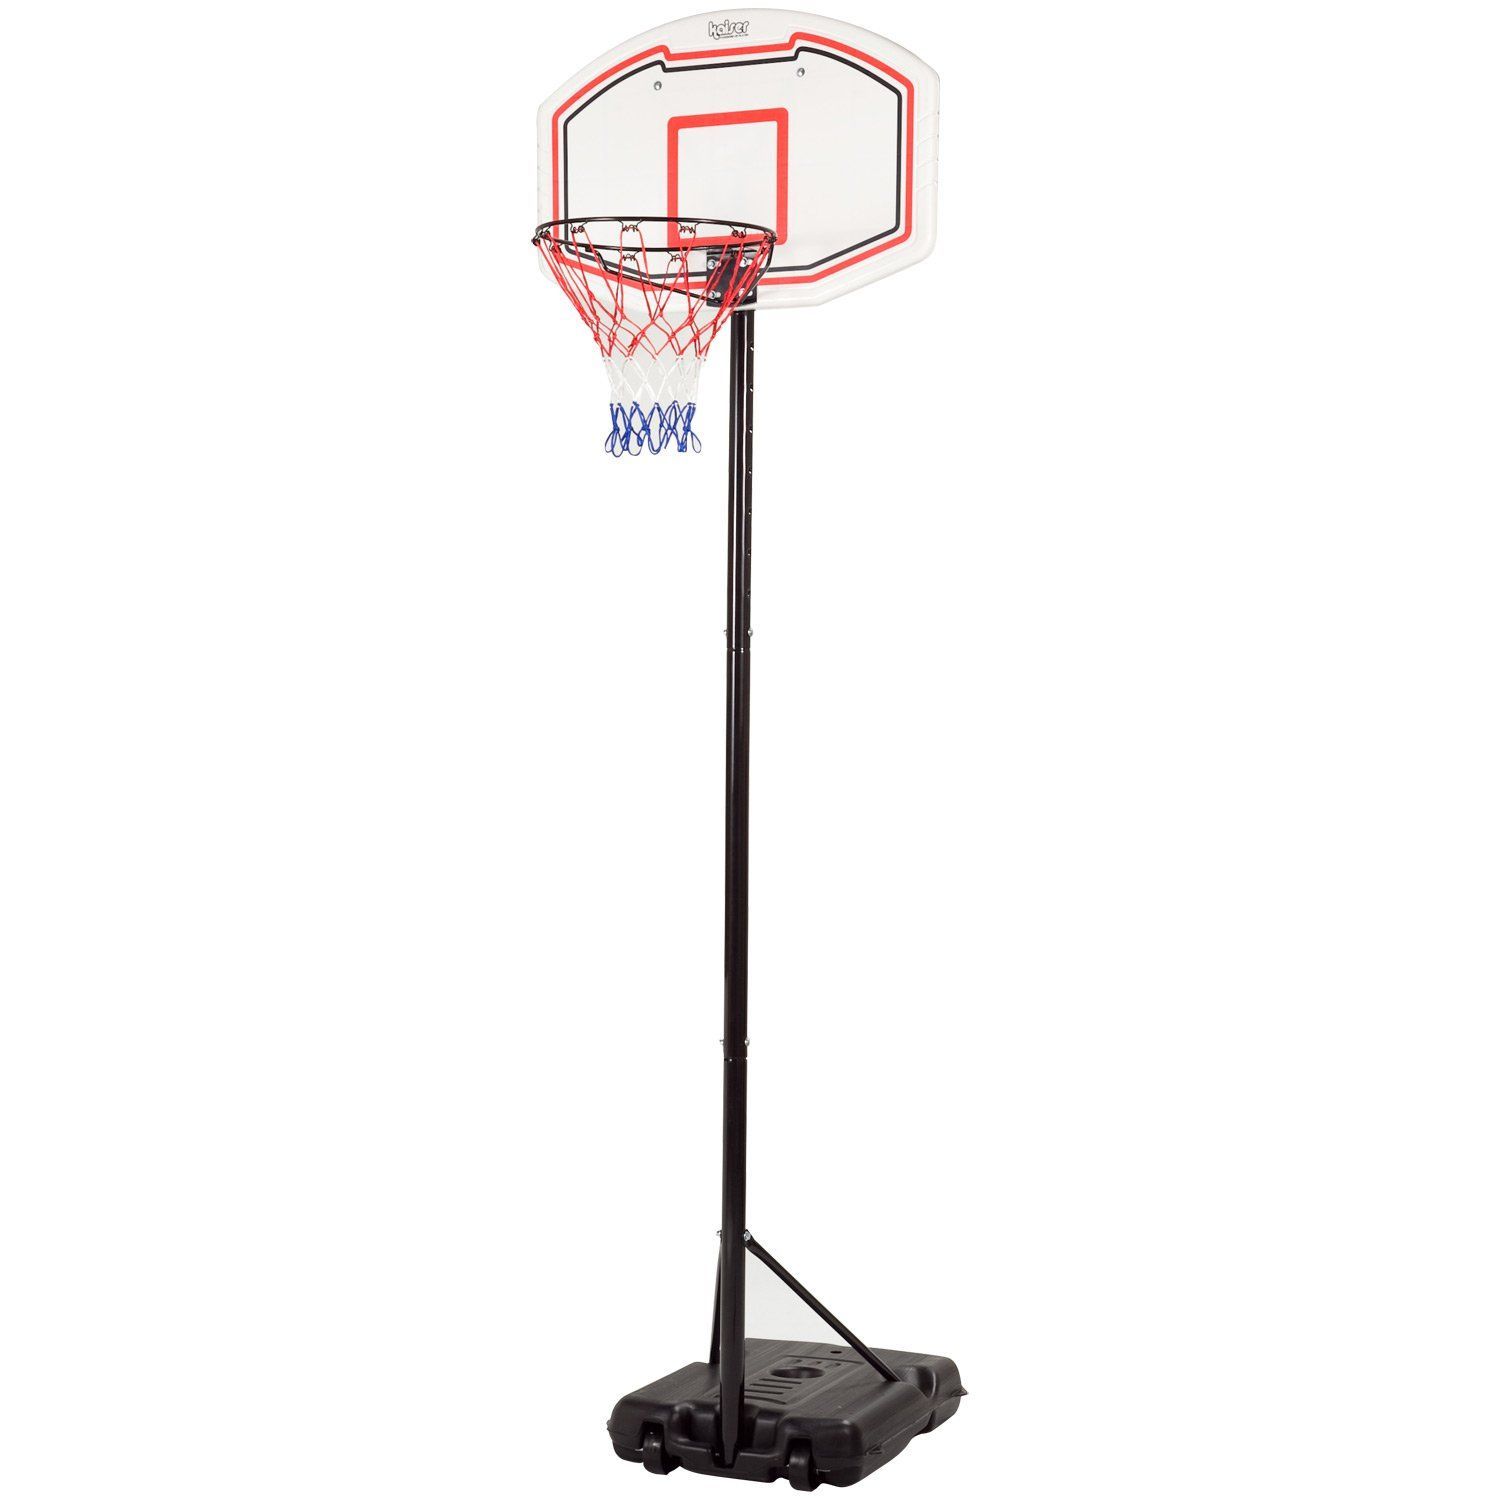 SKLZ (スキルズ) キックアウト バスケットボールリターンシュート フープ取り付けタイプ シュート練習用 クイックセットアップ シル